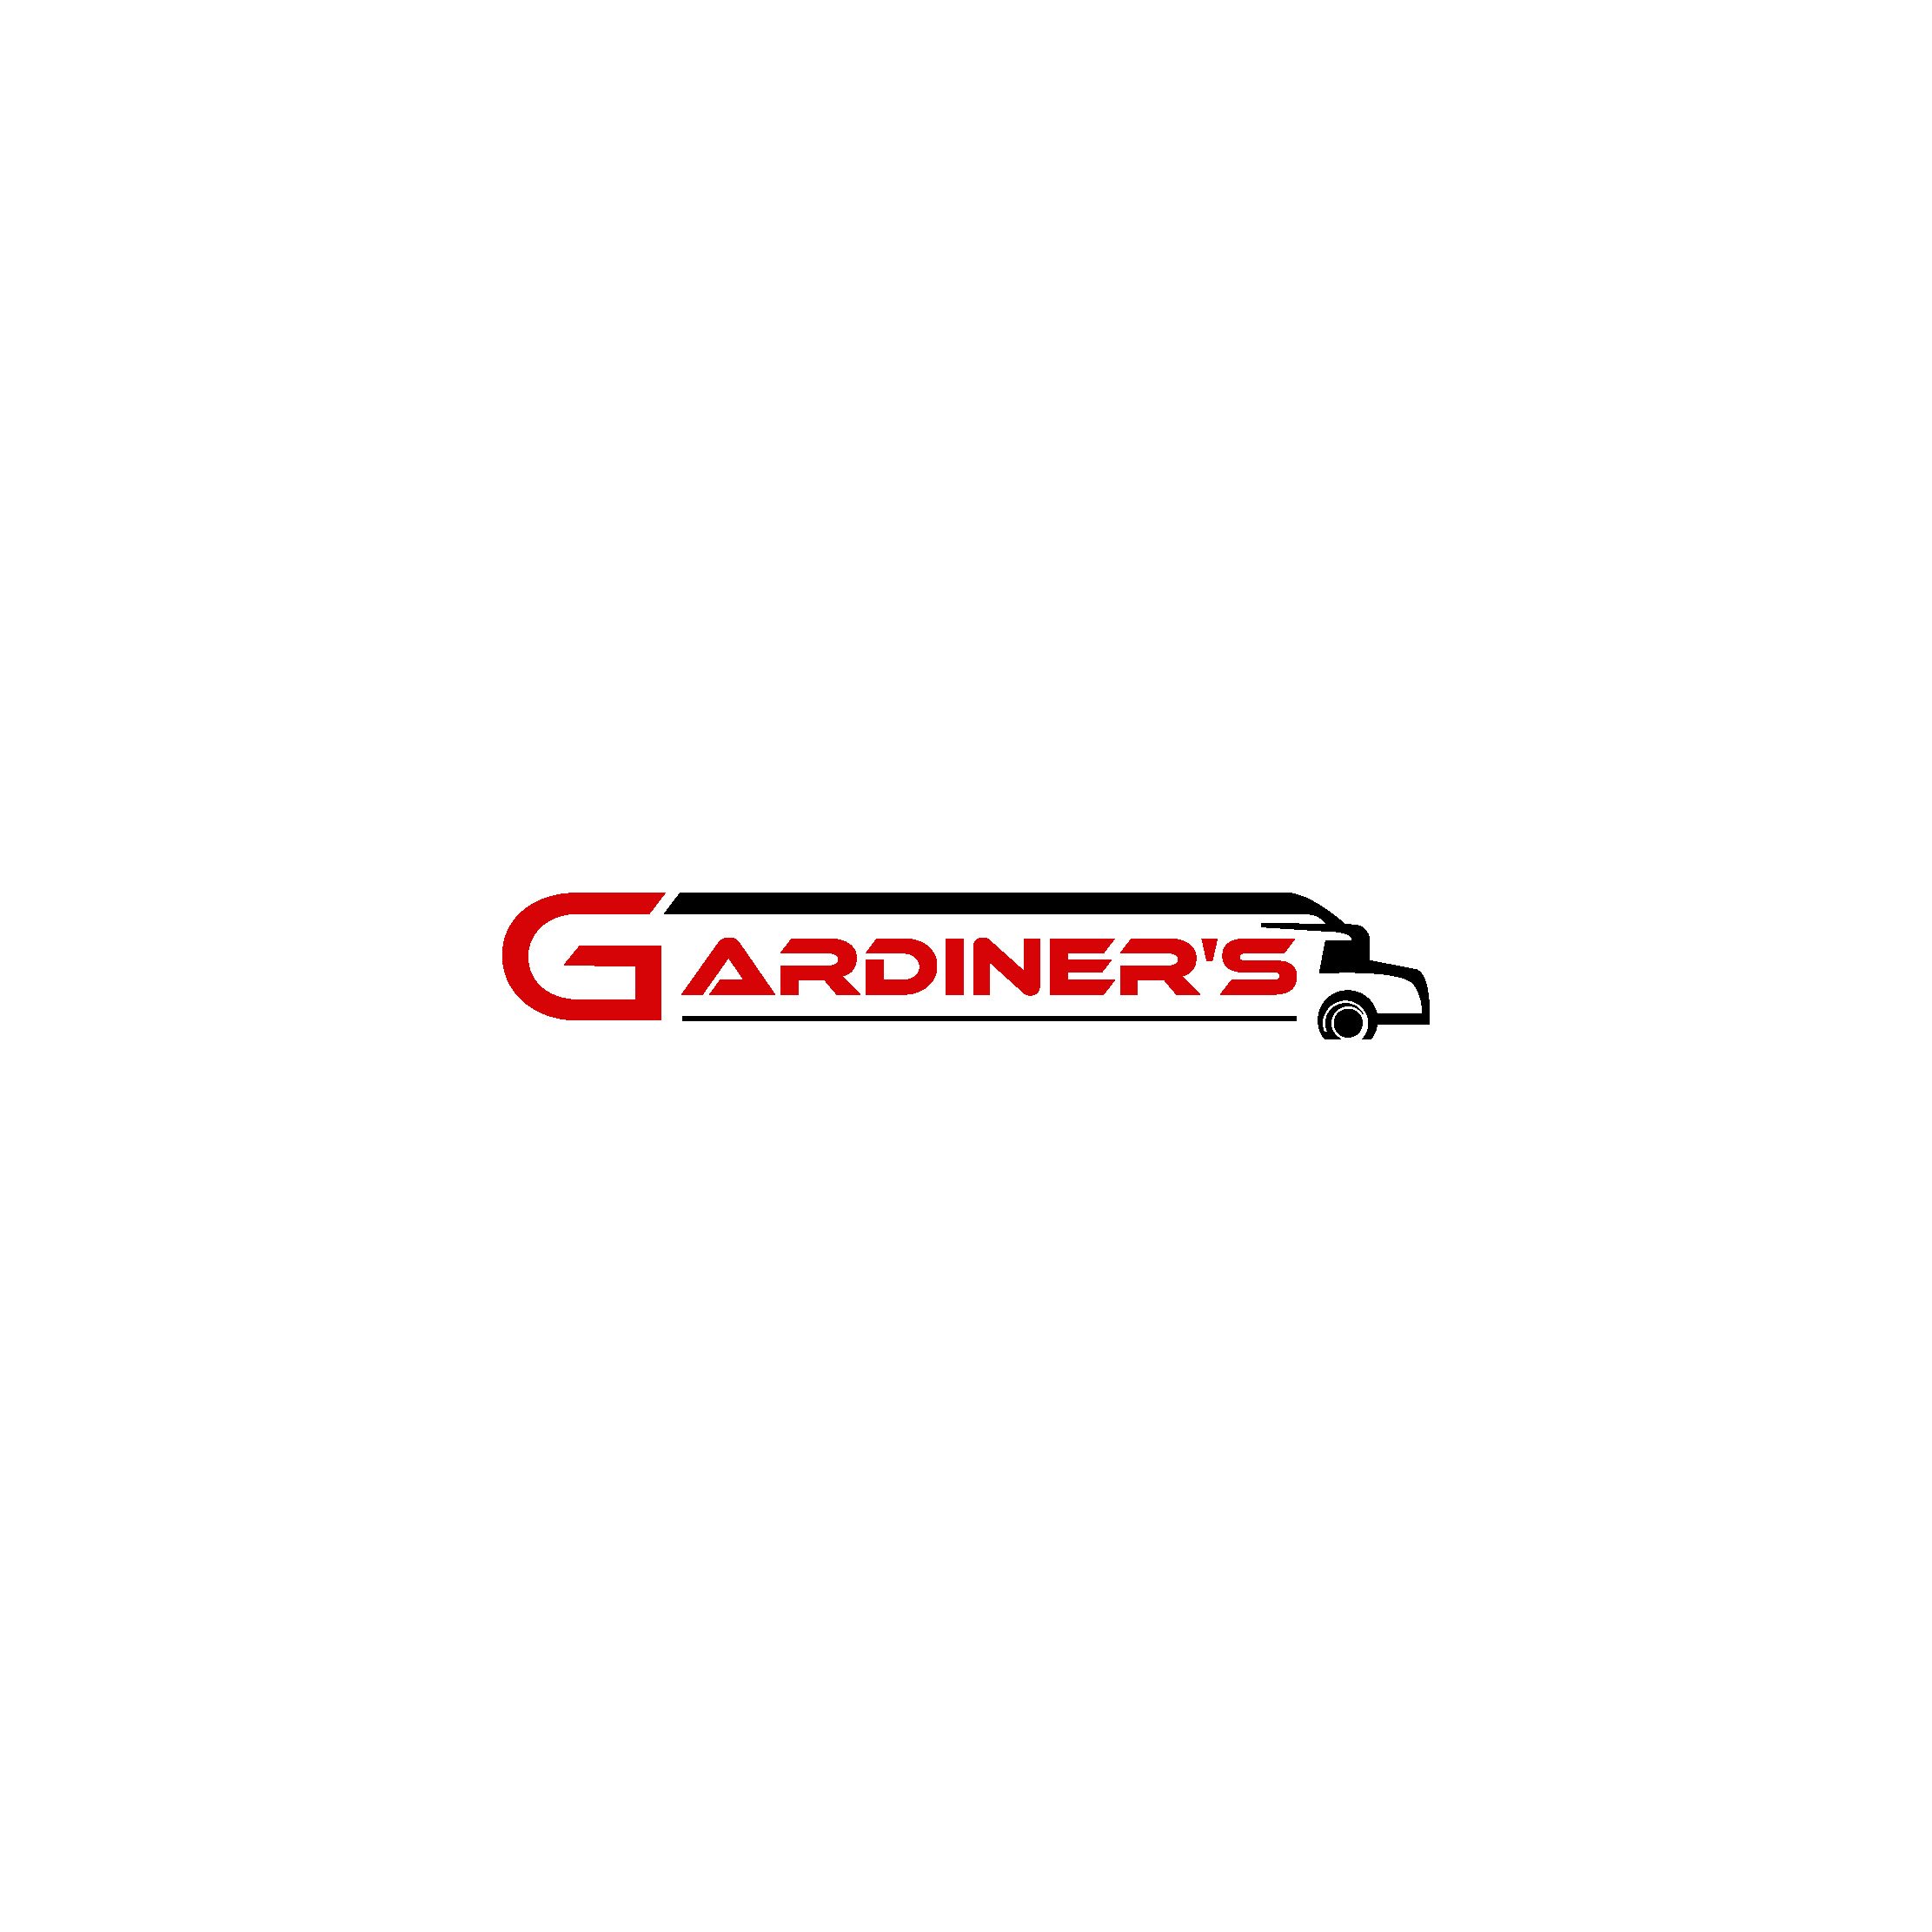 Gardiners Rink Board.jpg